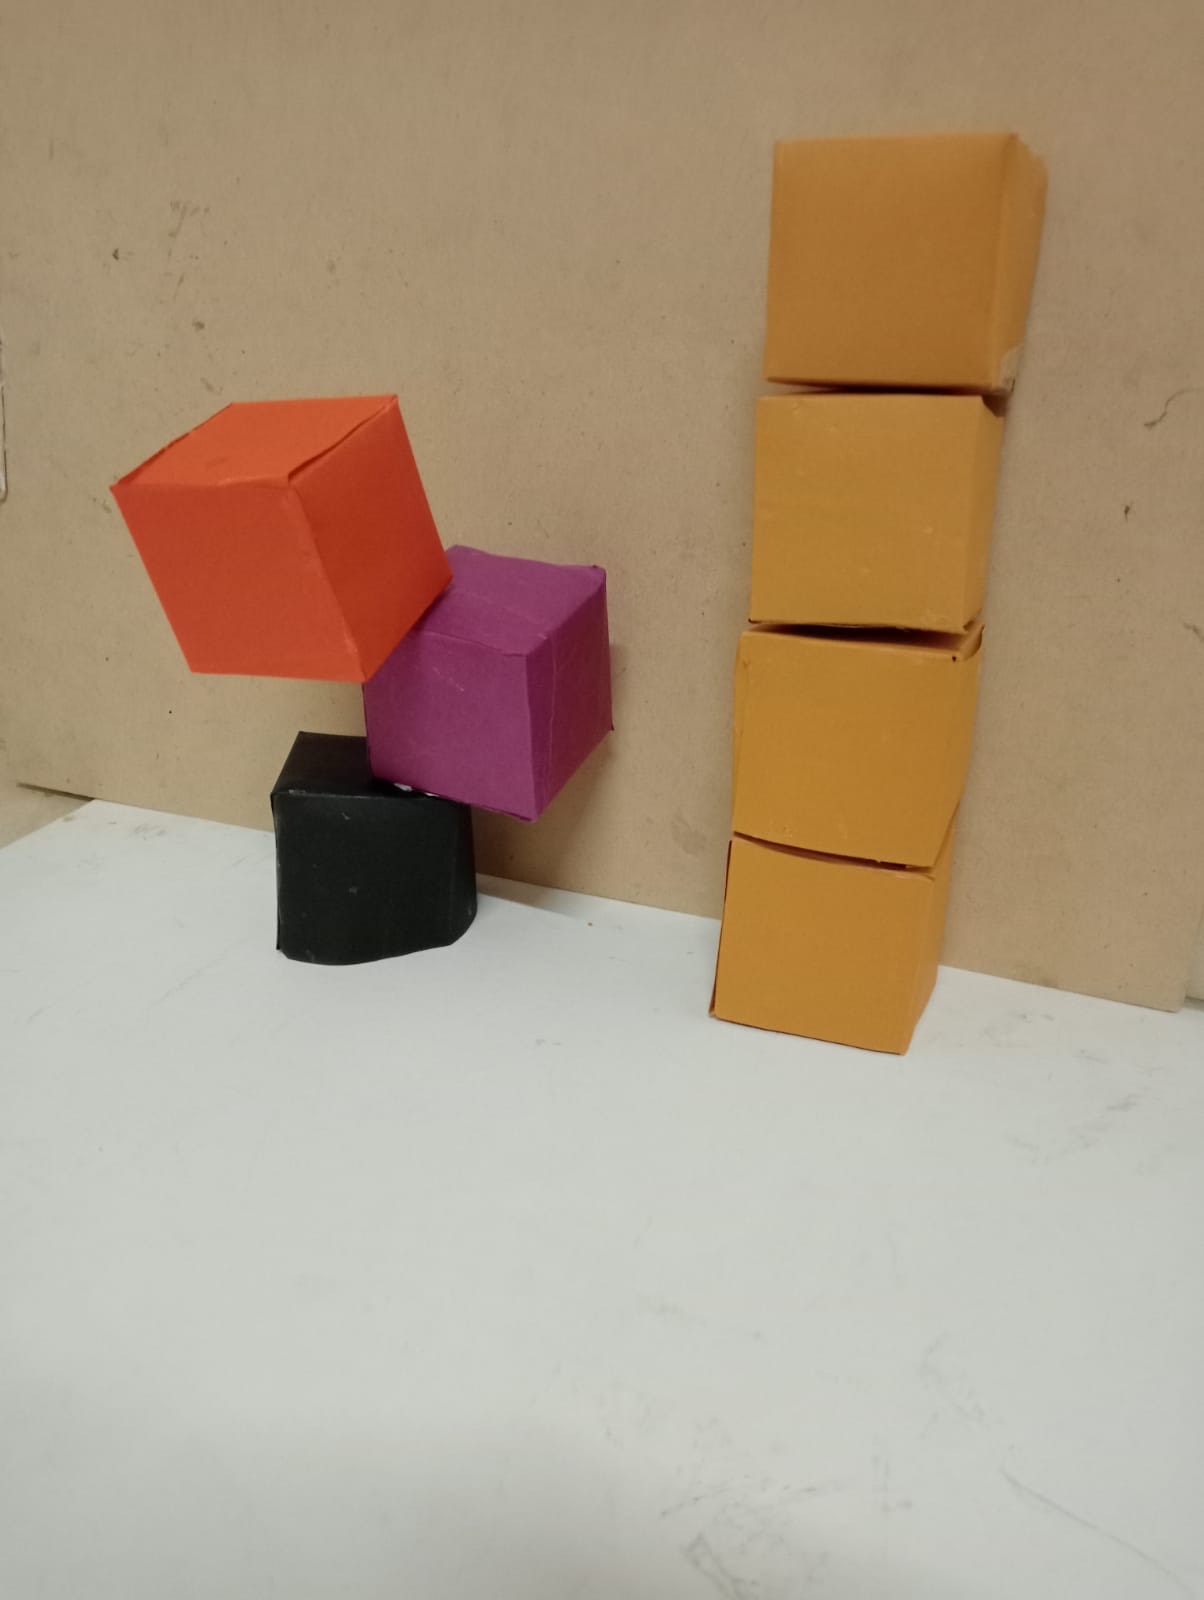 Student sculpture, stacked blocks